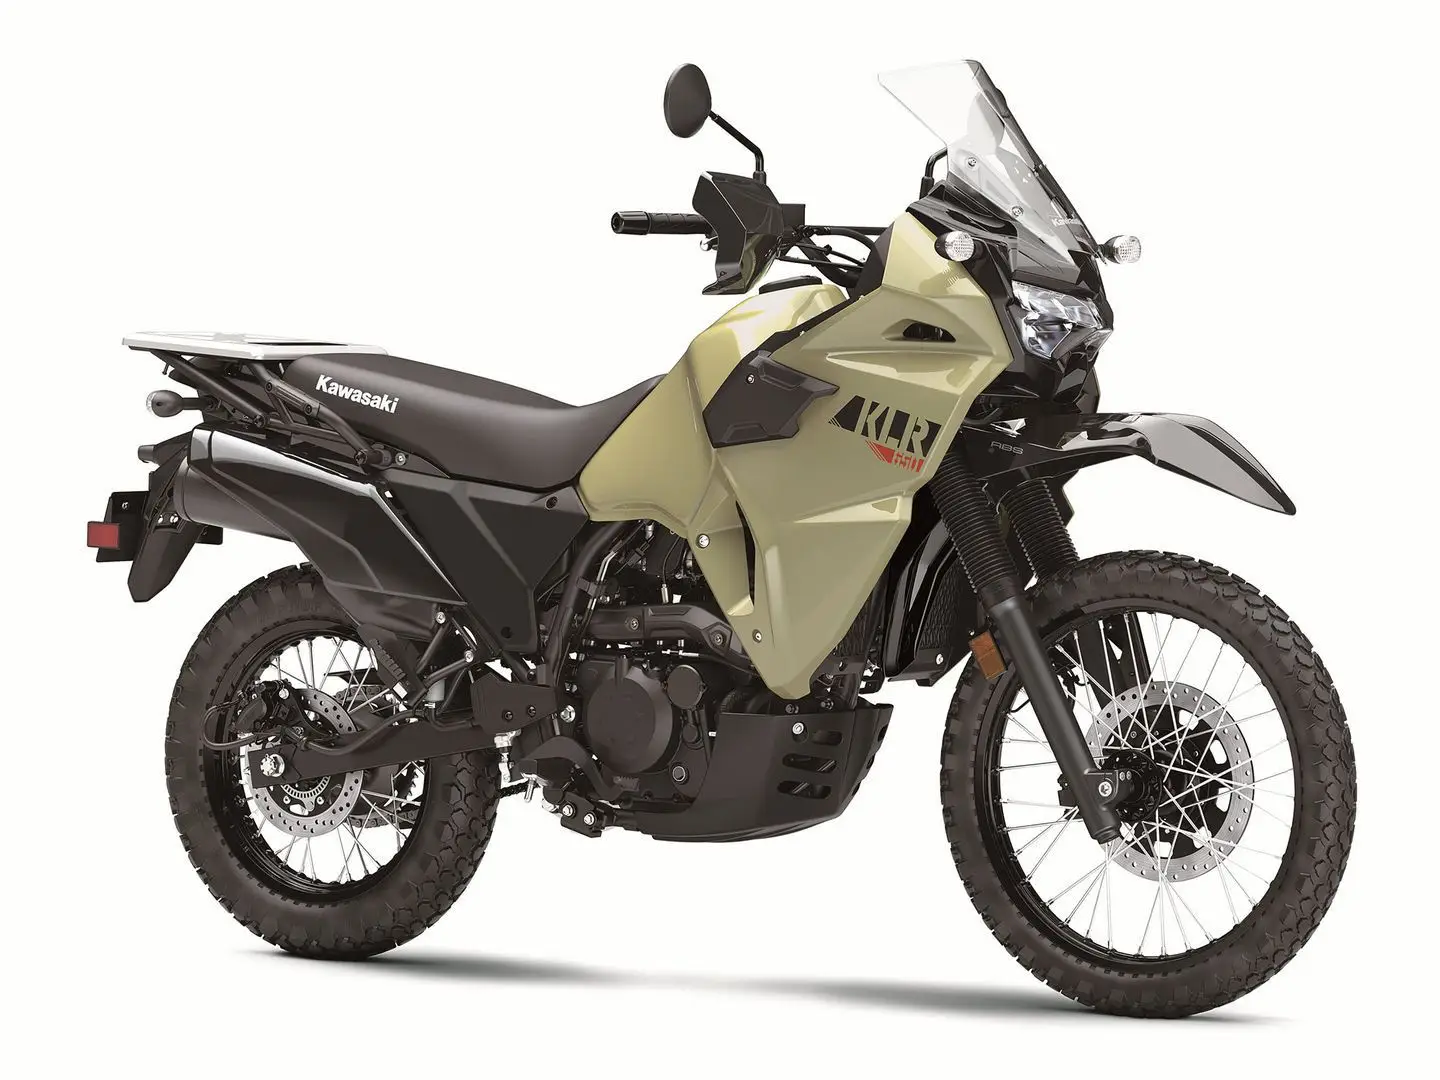 2022 Kawasaki KLR650 tanıtım